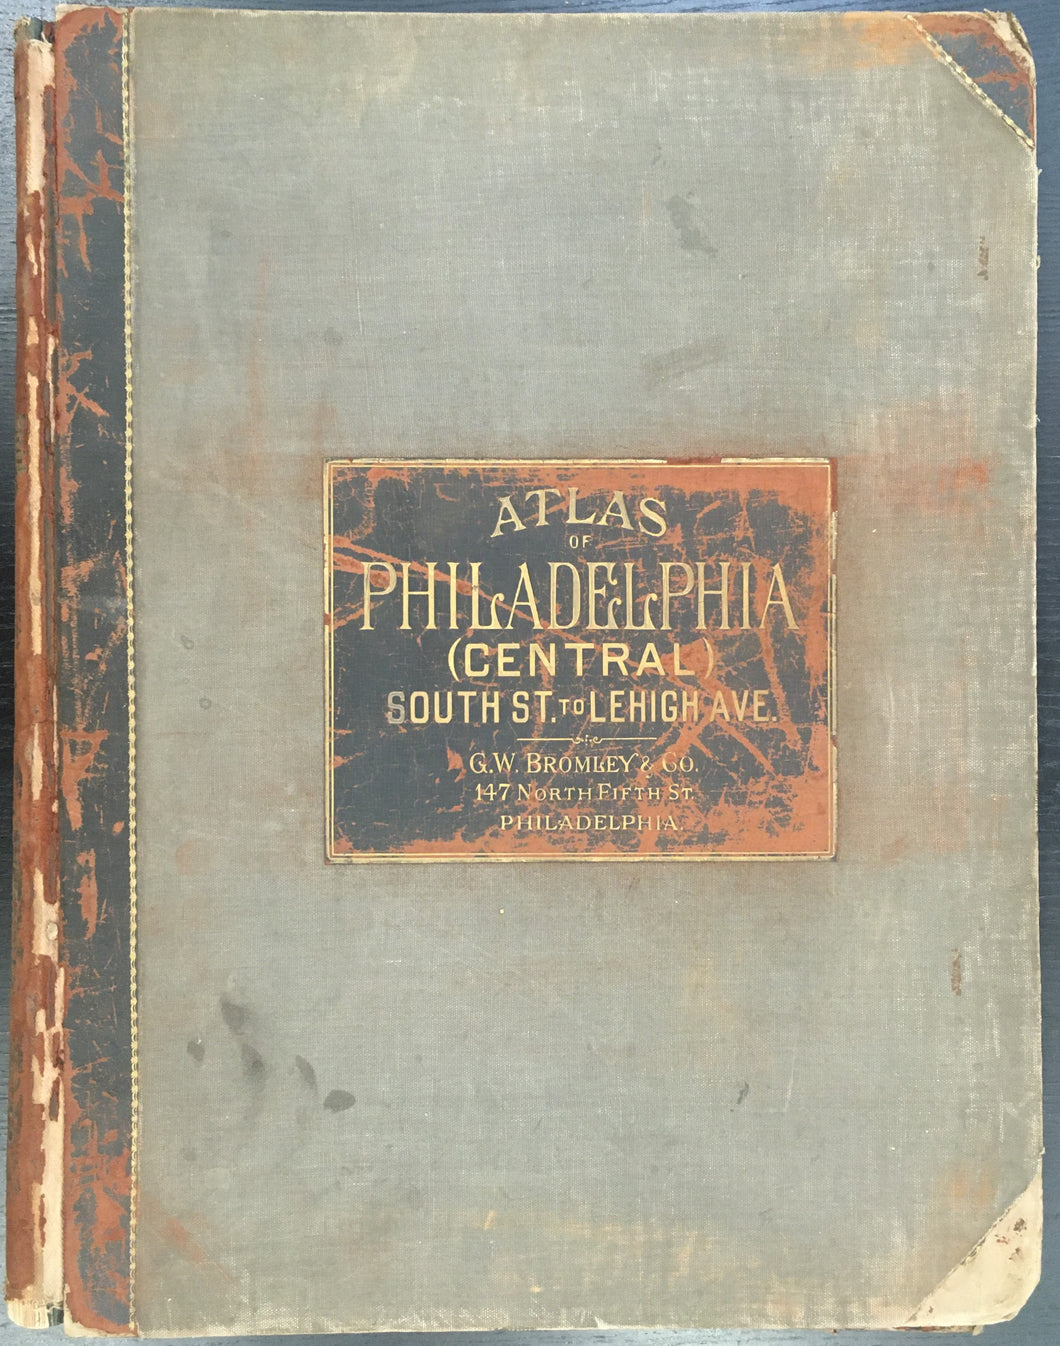 Bromley, G. W.  “Atlas of the City of Philadelphia: Wards: 5-20, 28, 29, 31, 32, 37, & 47.”  [Central Philadelphia]. 1922